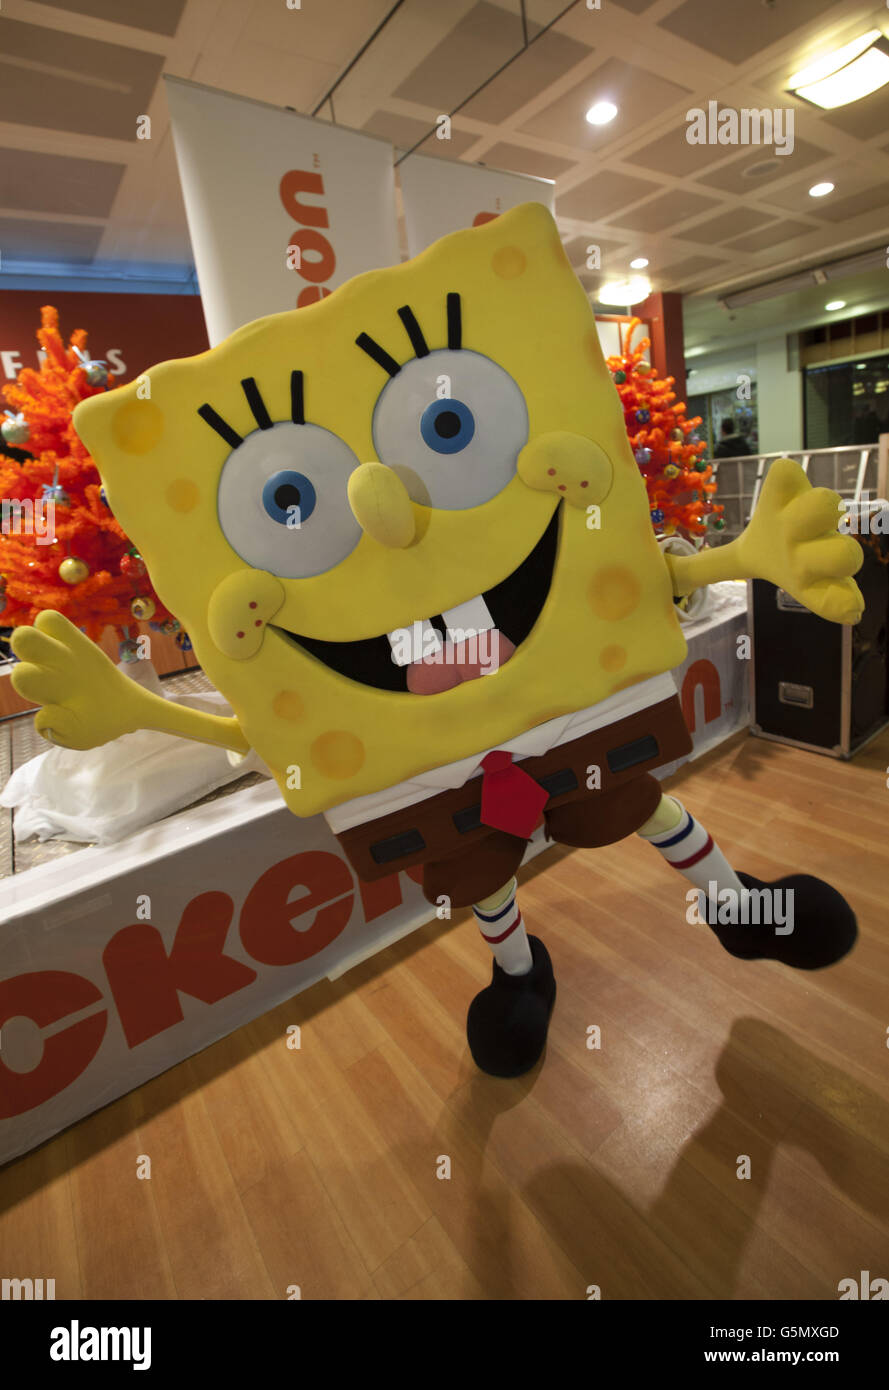 Nickelodeon spongebob squarepants hi-res stock photography and images -  Alamy